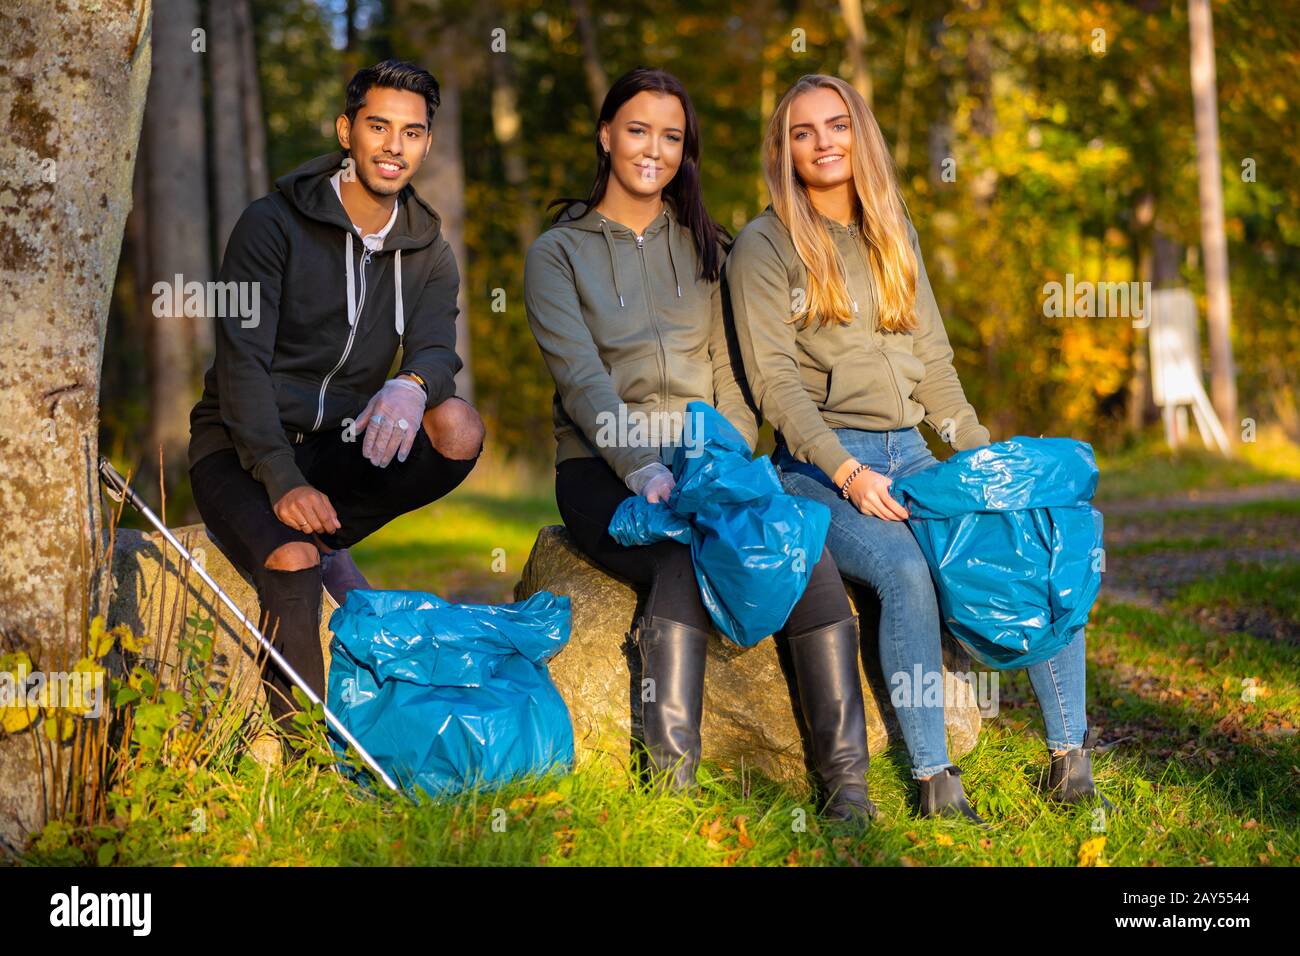 Female volunteers picking up garbage on grass Stock Photo